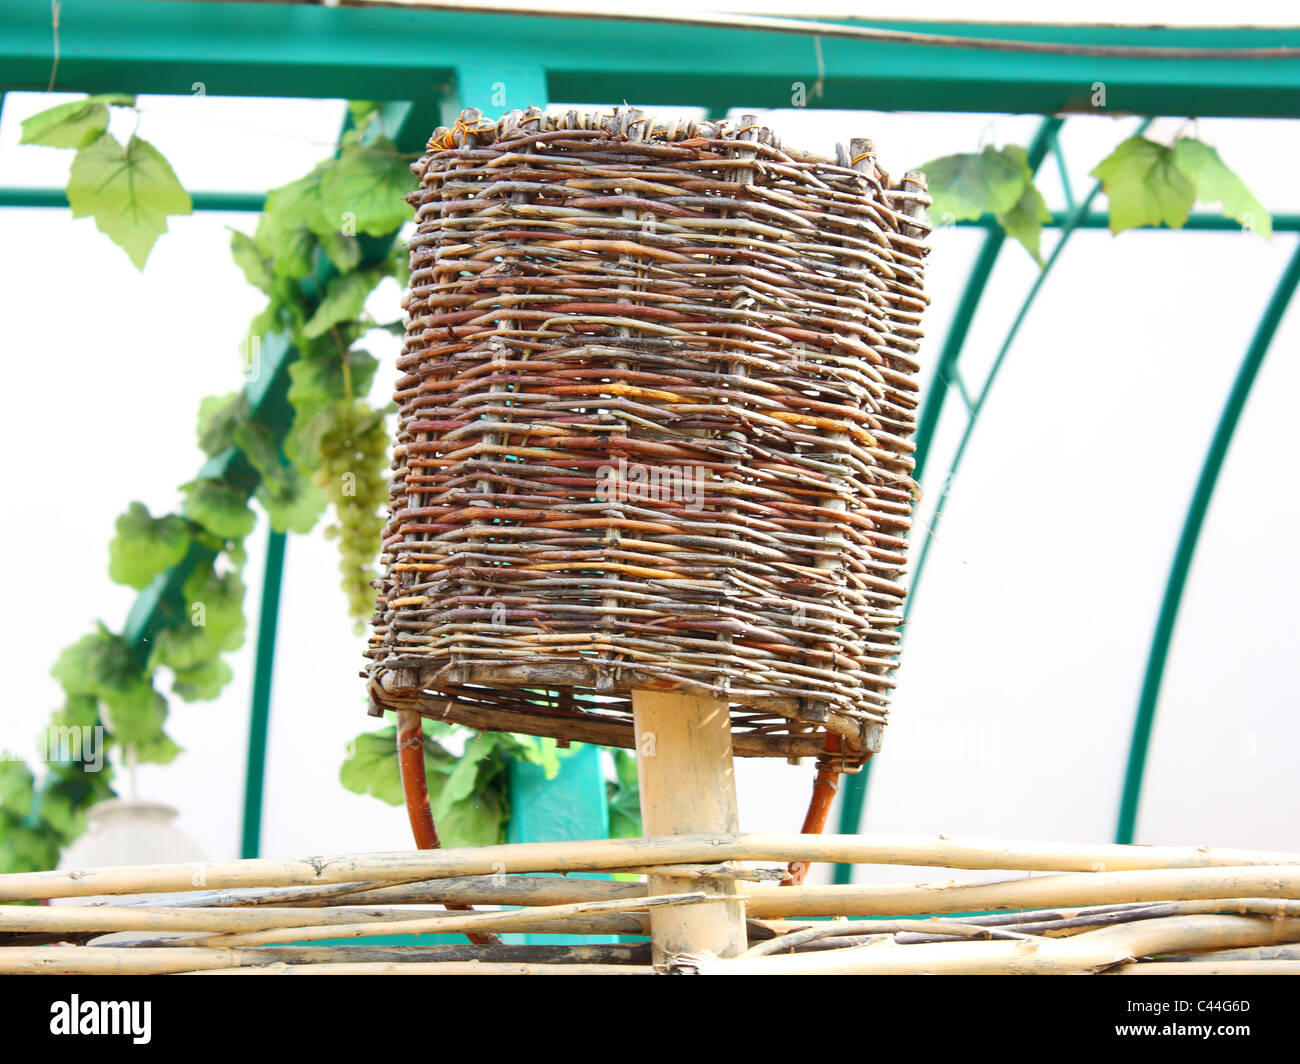 The wattled basket hangs on a wattled fence upside down Stock Photo